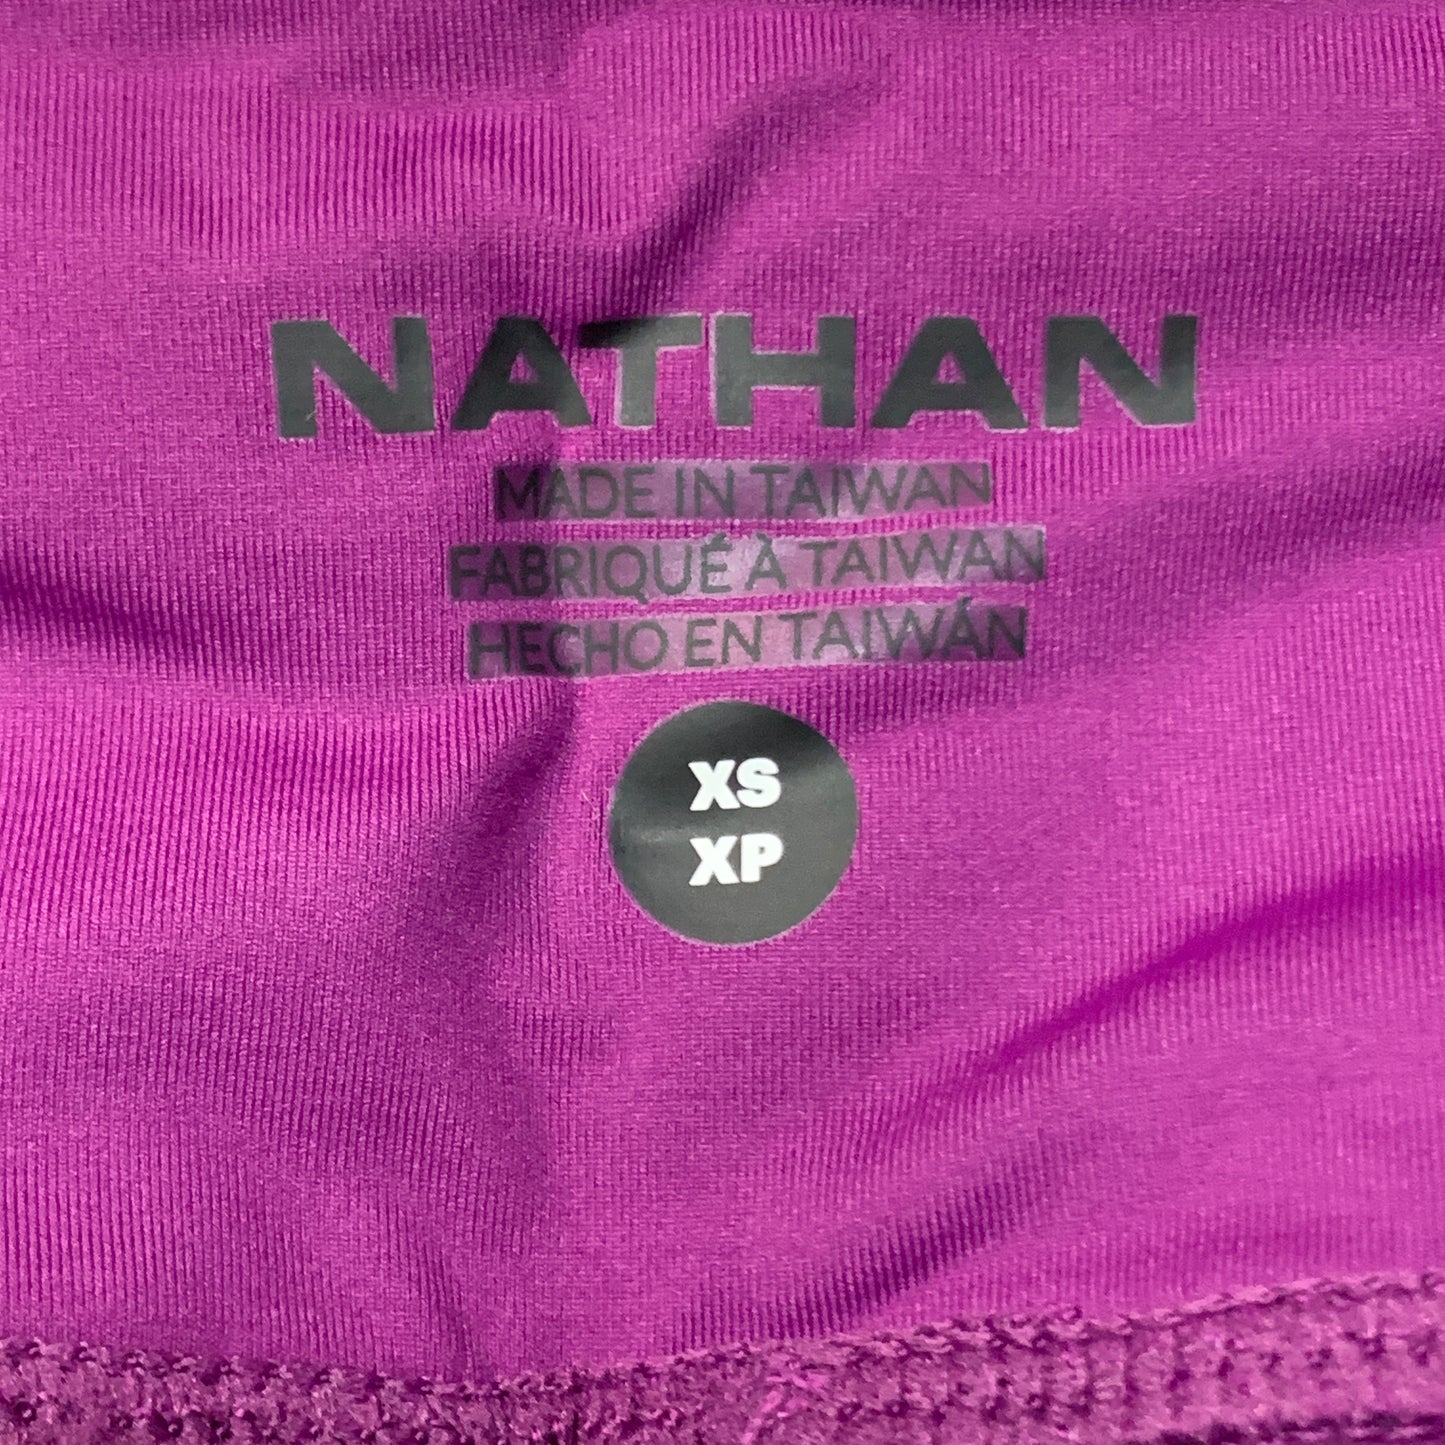 NATHAN Interval 6" Inseam Bike Short Women's Plum Size XS NS51520-70030-XS